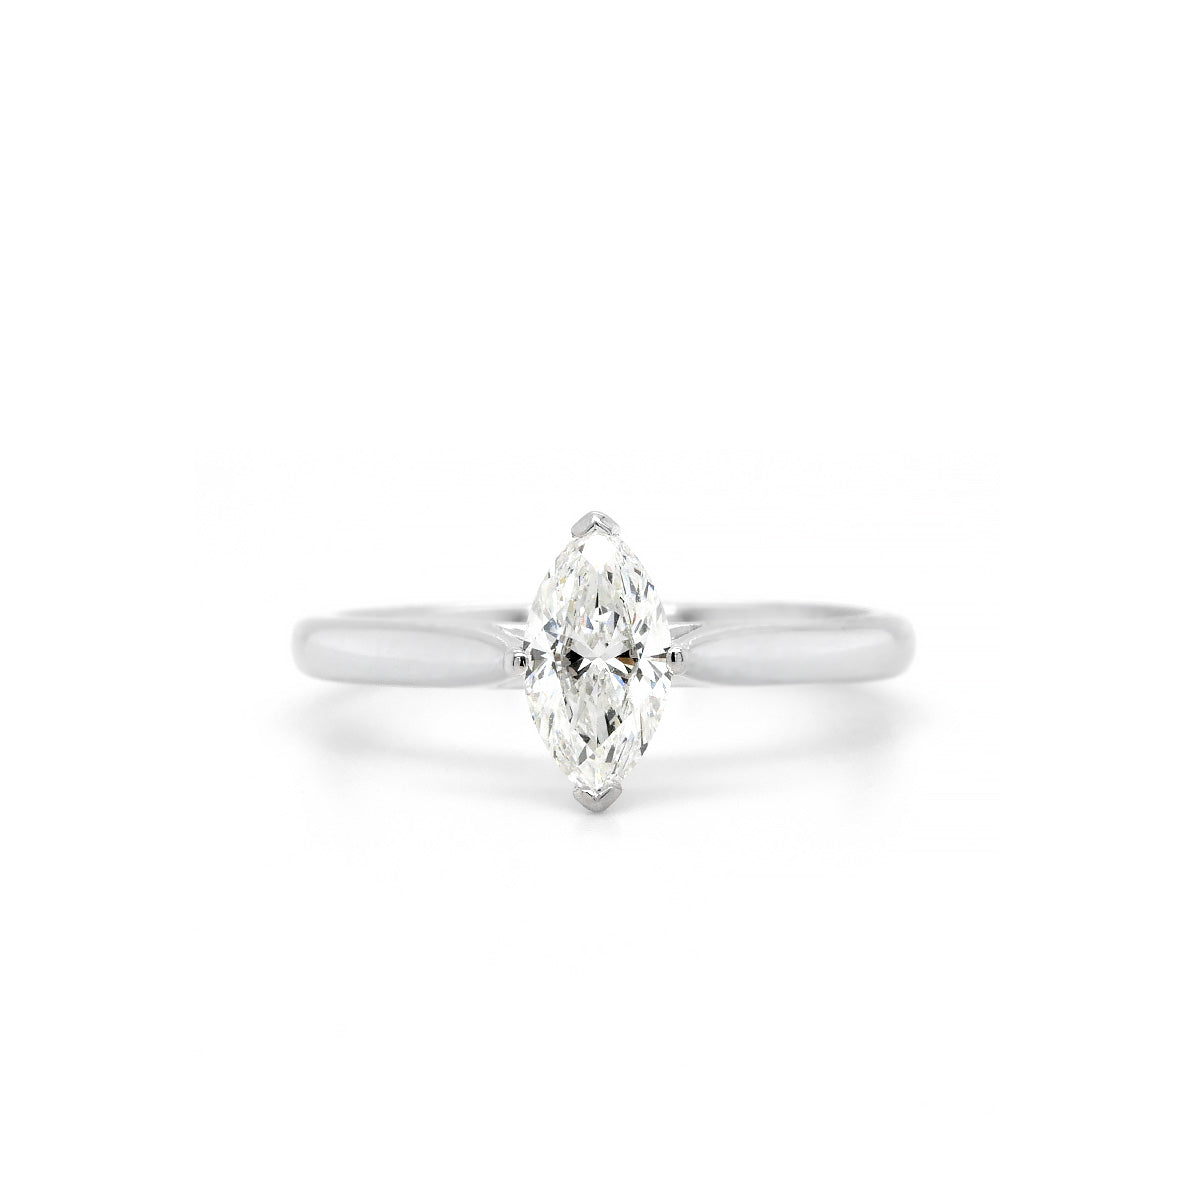 Platinum Single Stone Diamond Ring with Marquise Cut Diamond